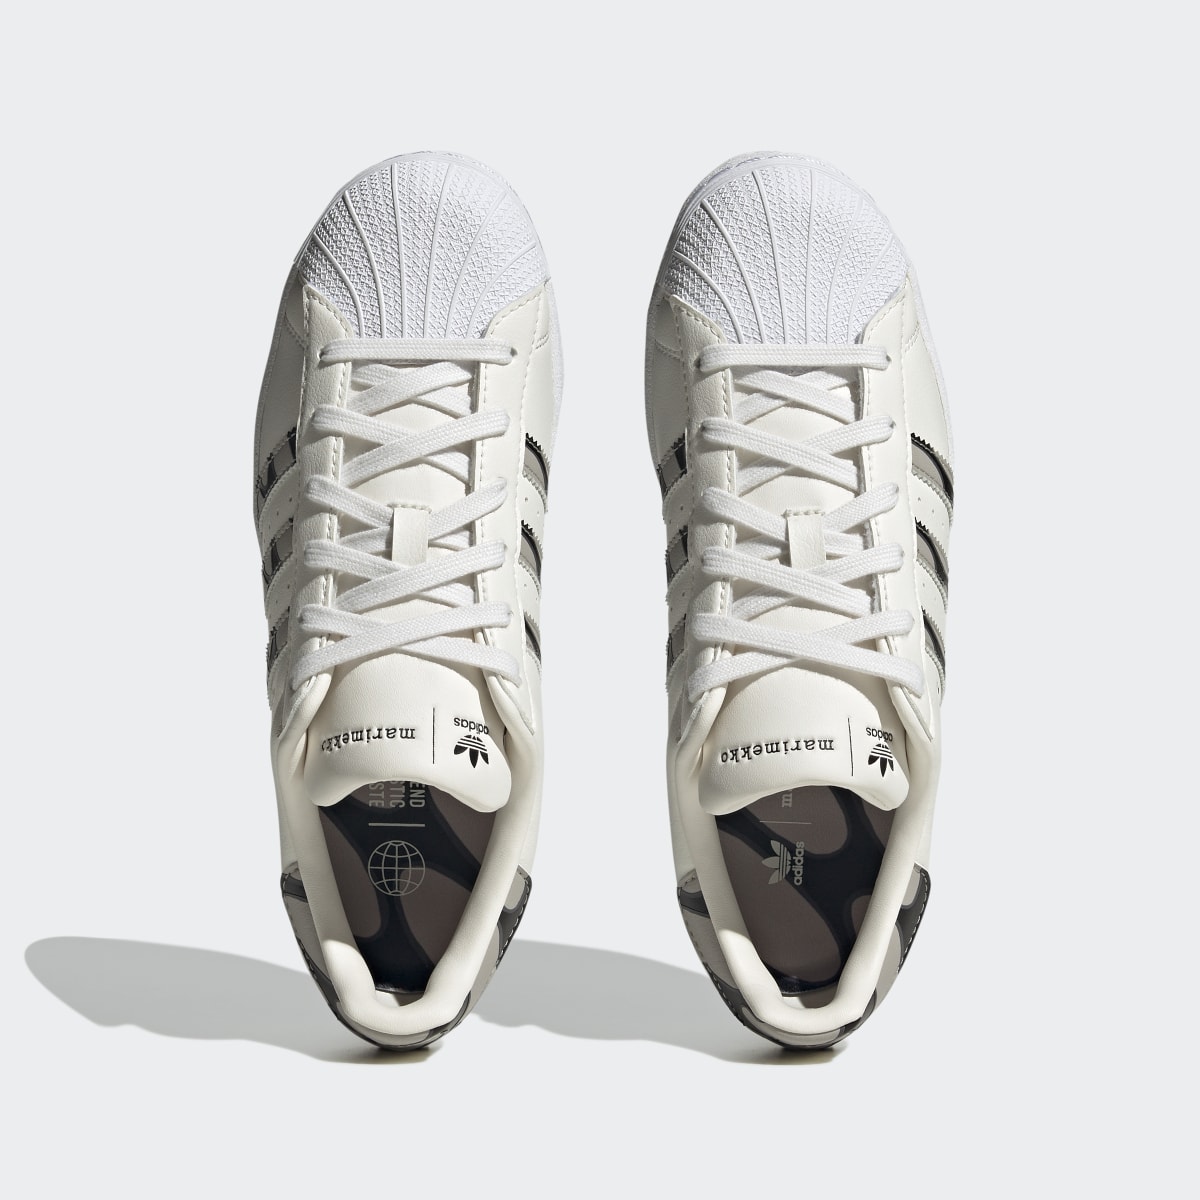 Adidas x Marimekko Superstar Schuh. 4